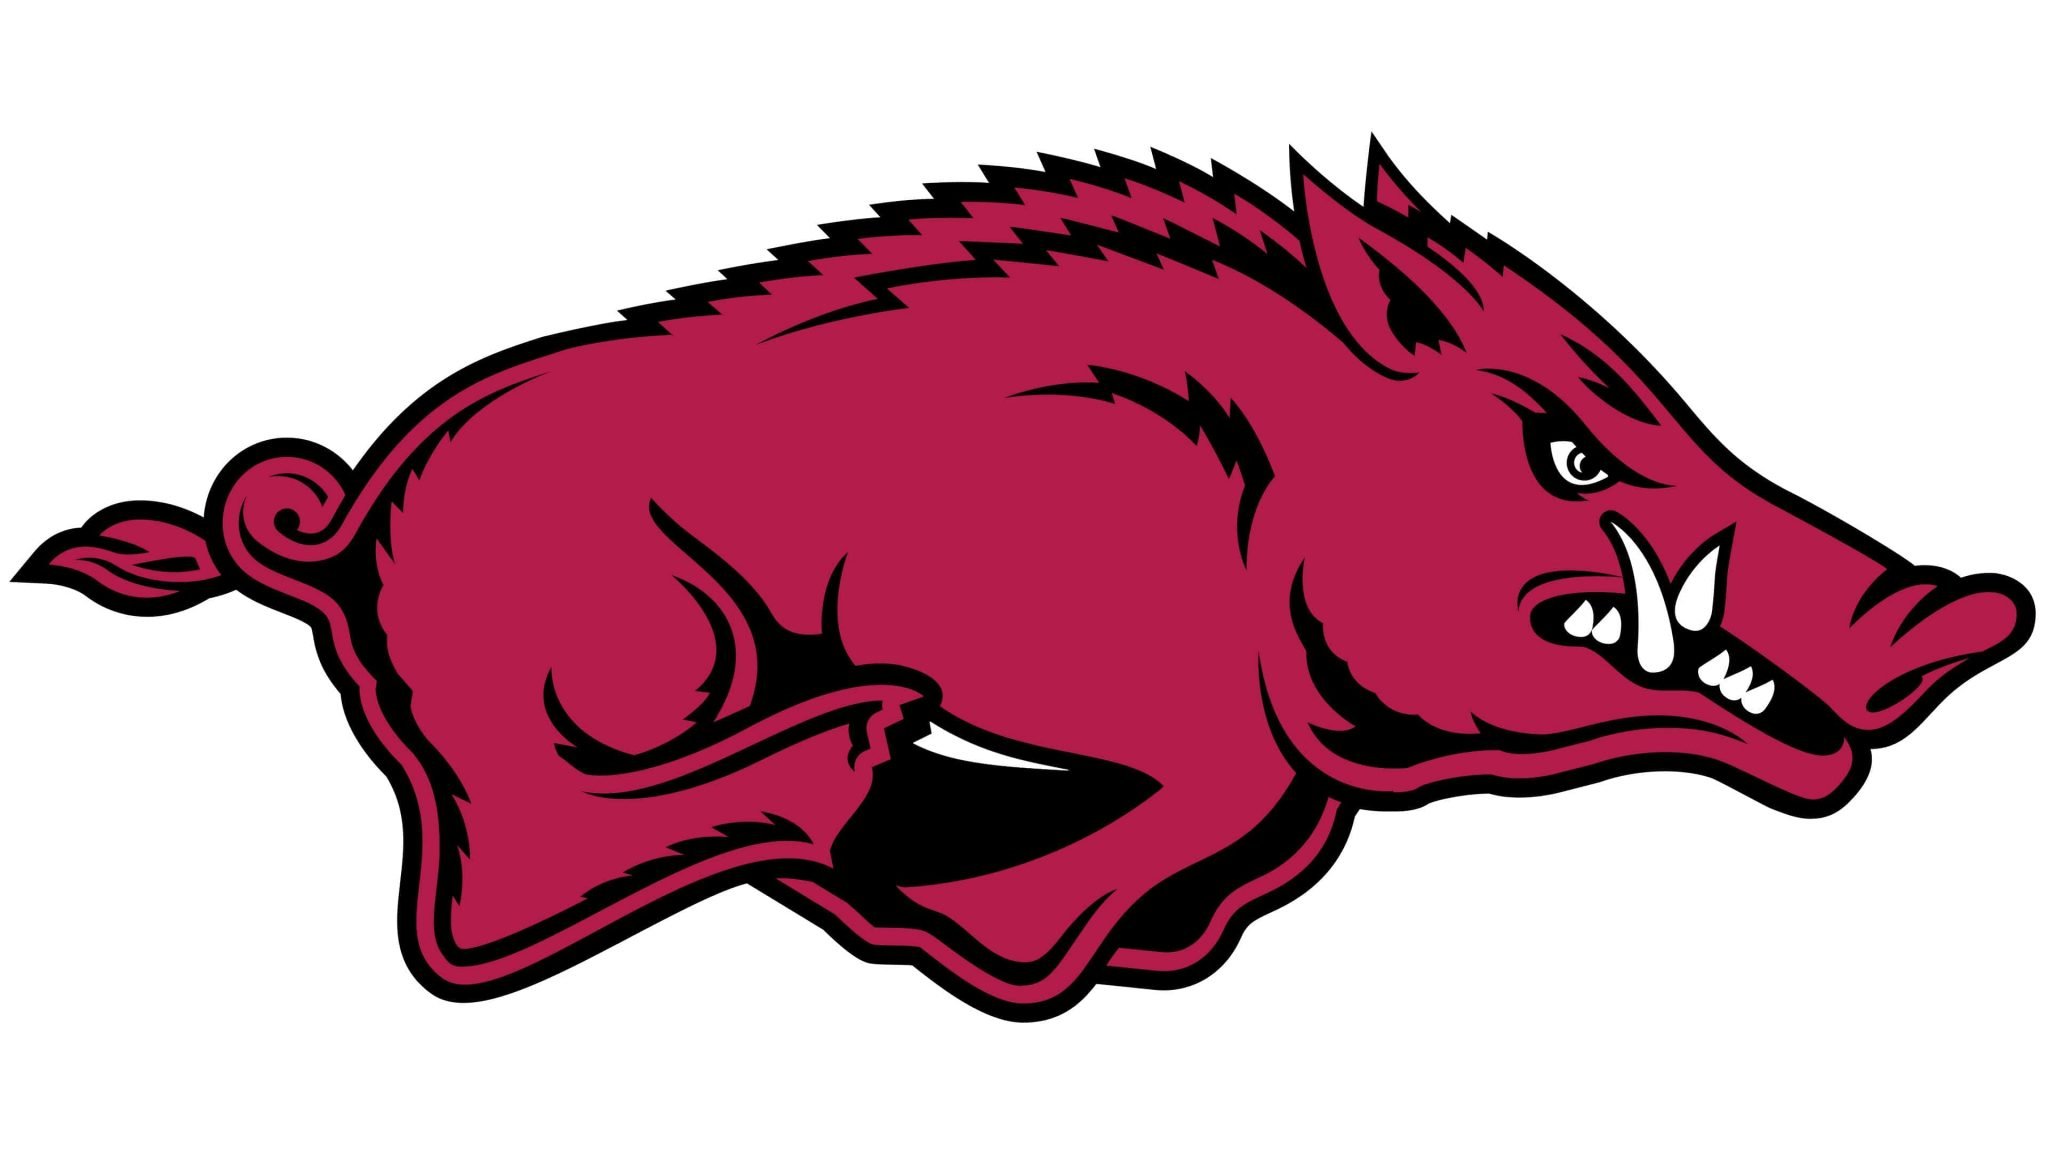 Arkansas Razorbacks logo.